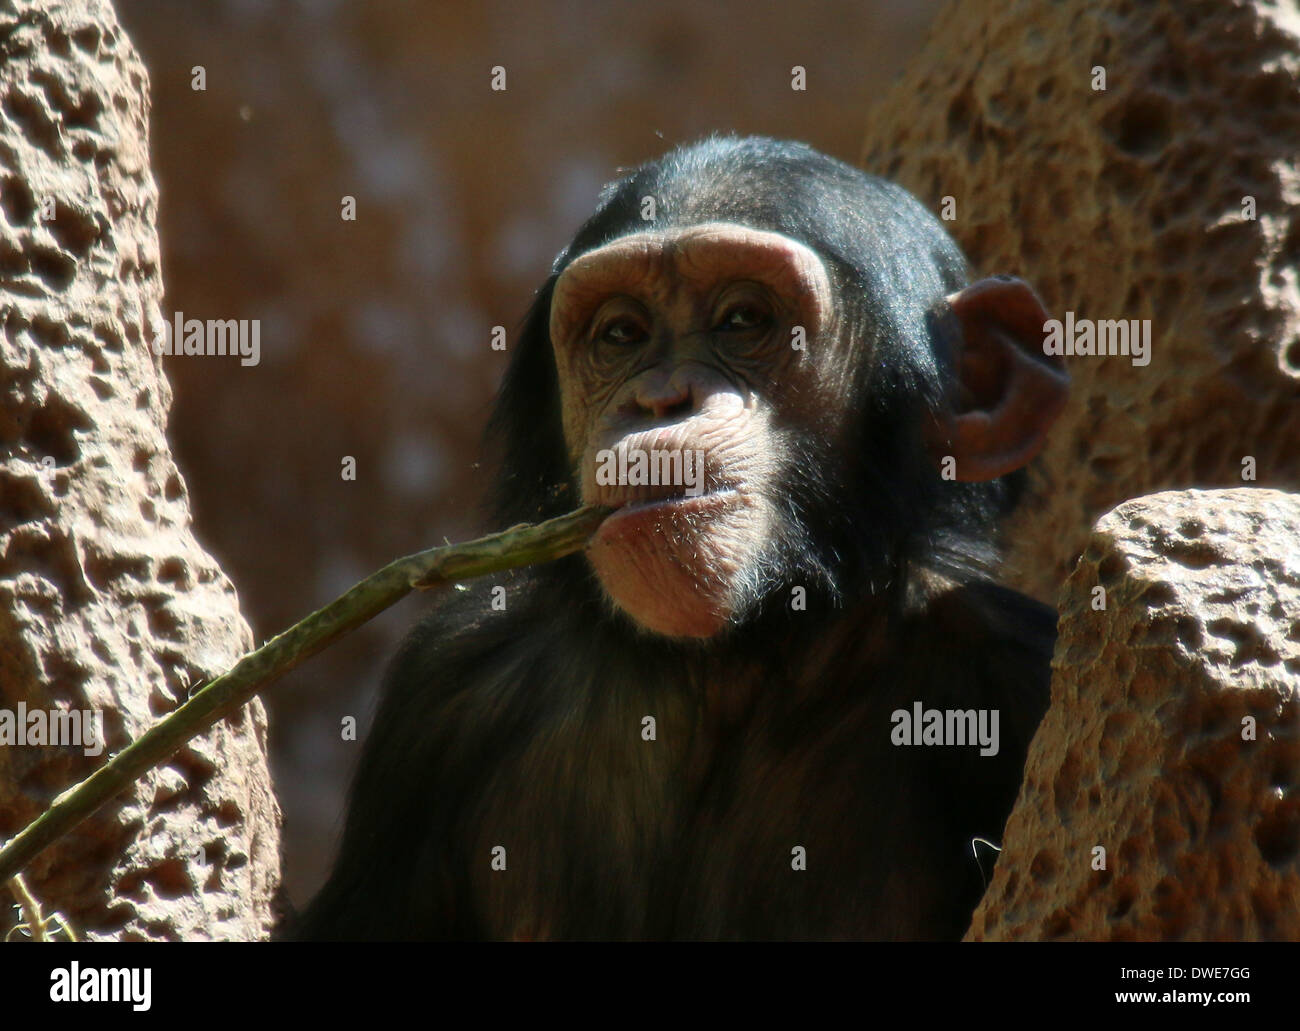 Juvenile Common chimpanzee (Pan troglodytes) chewing on a branch Stock Photo